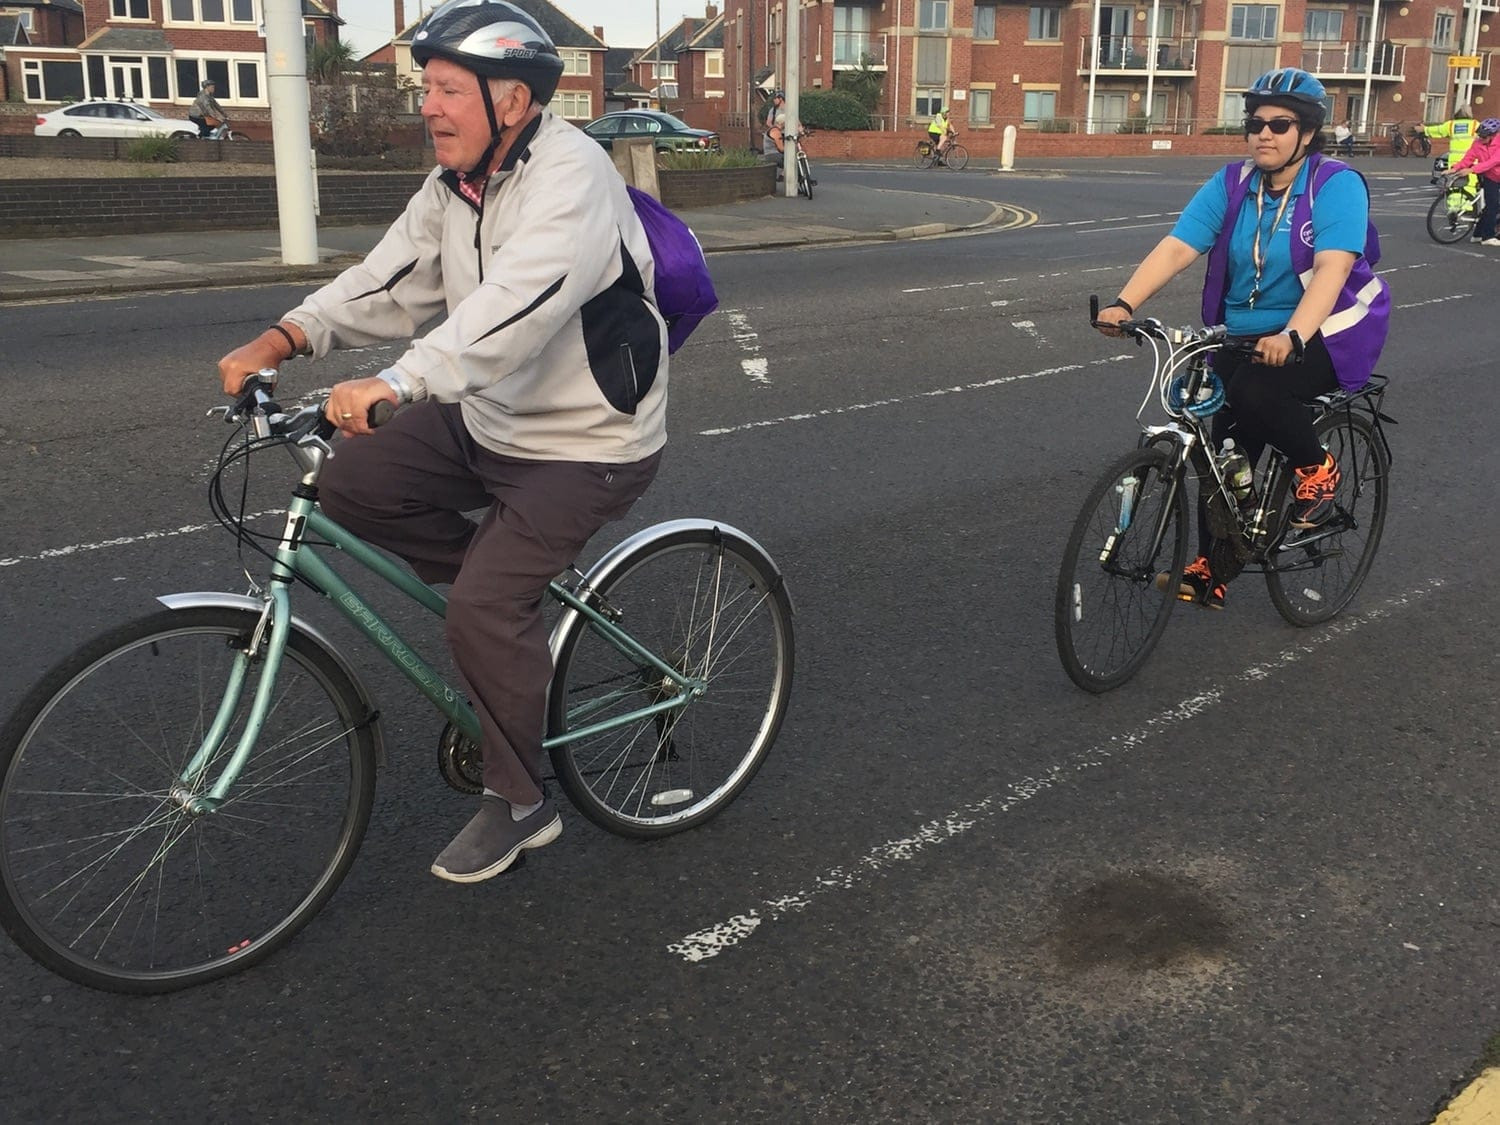 Twi bike riders in Blackpool